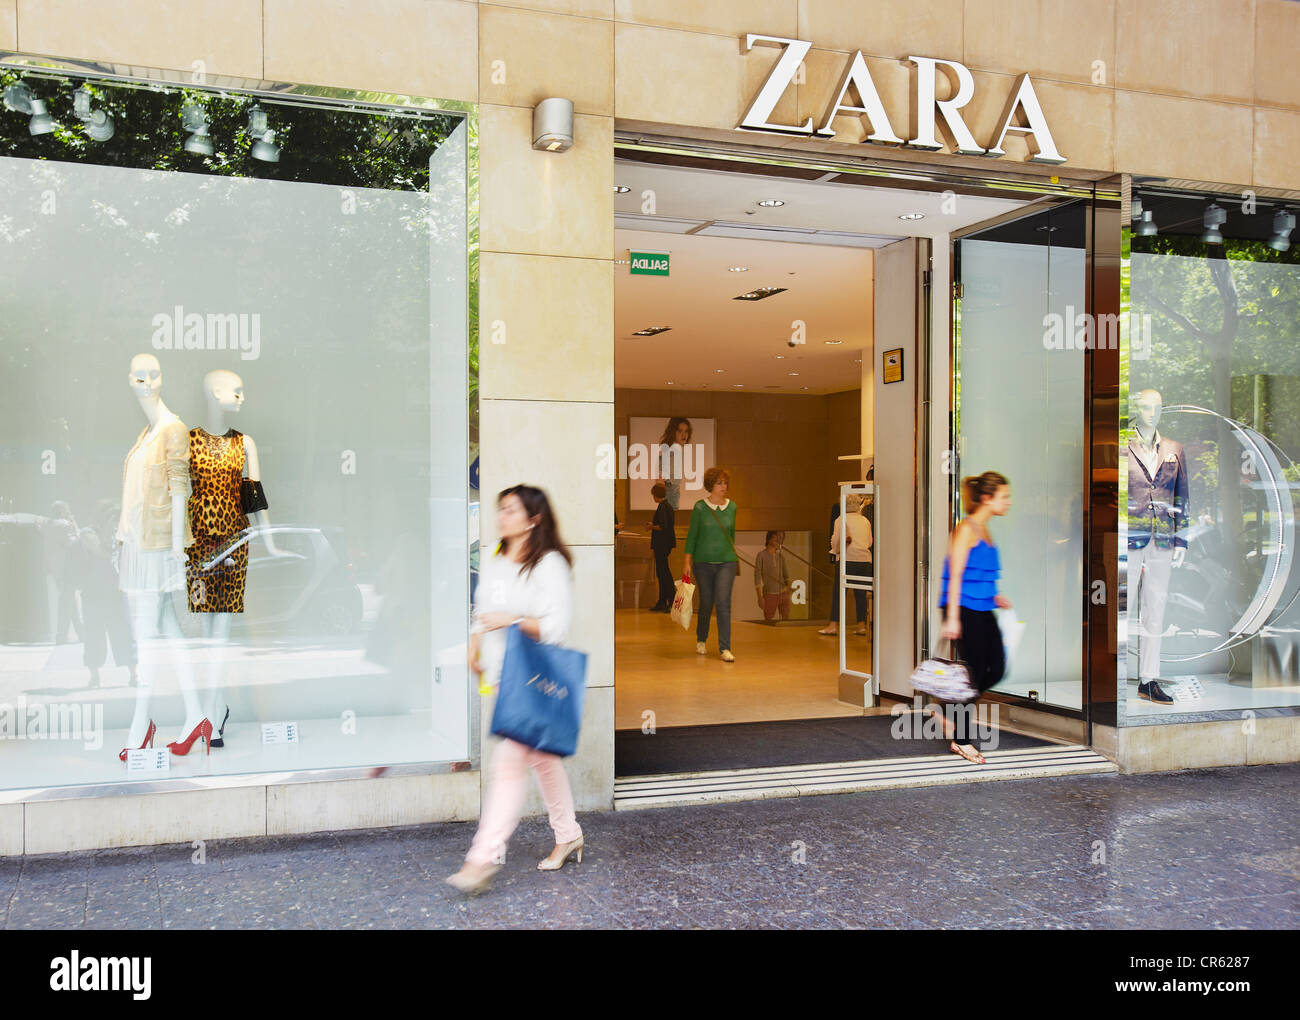 Zara Store. Madrid. Spain Stock Photo - Alamy